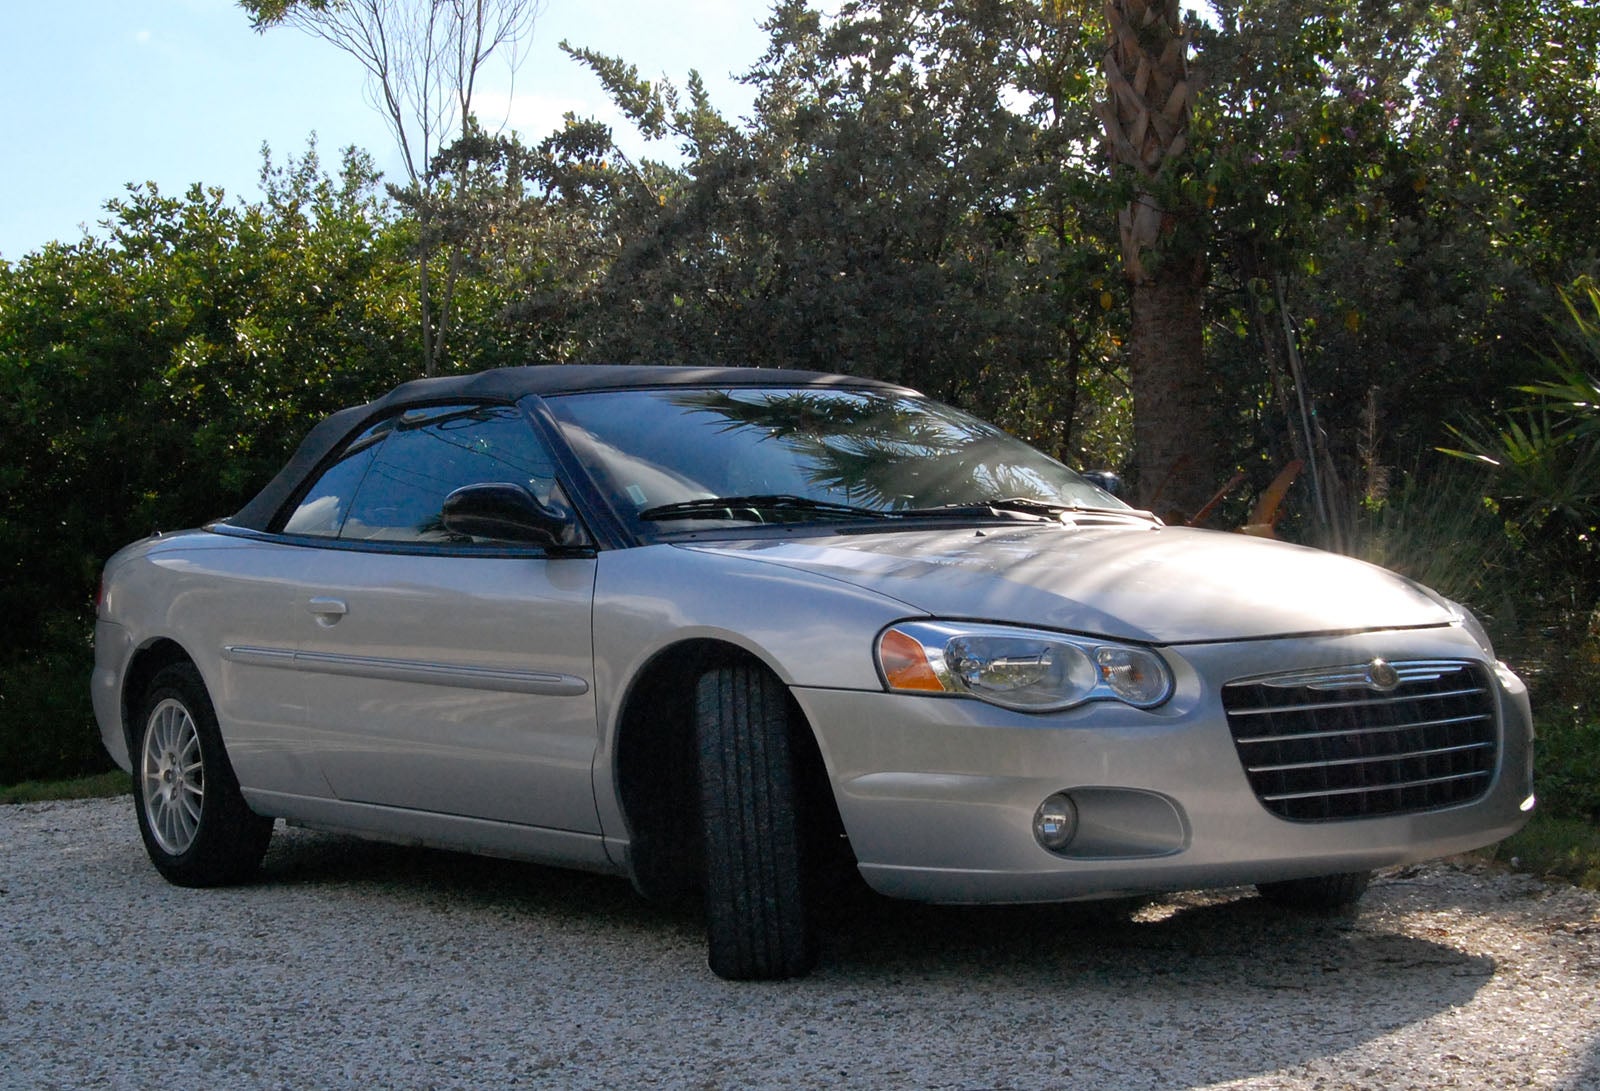 2005 Chrysler sebring convertible specifications